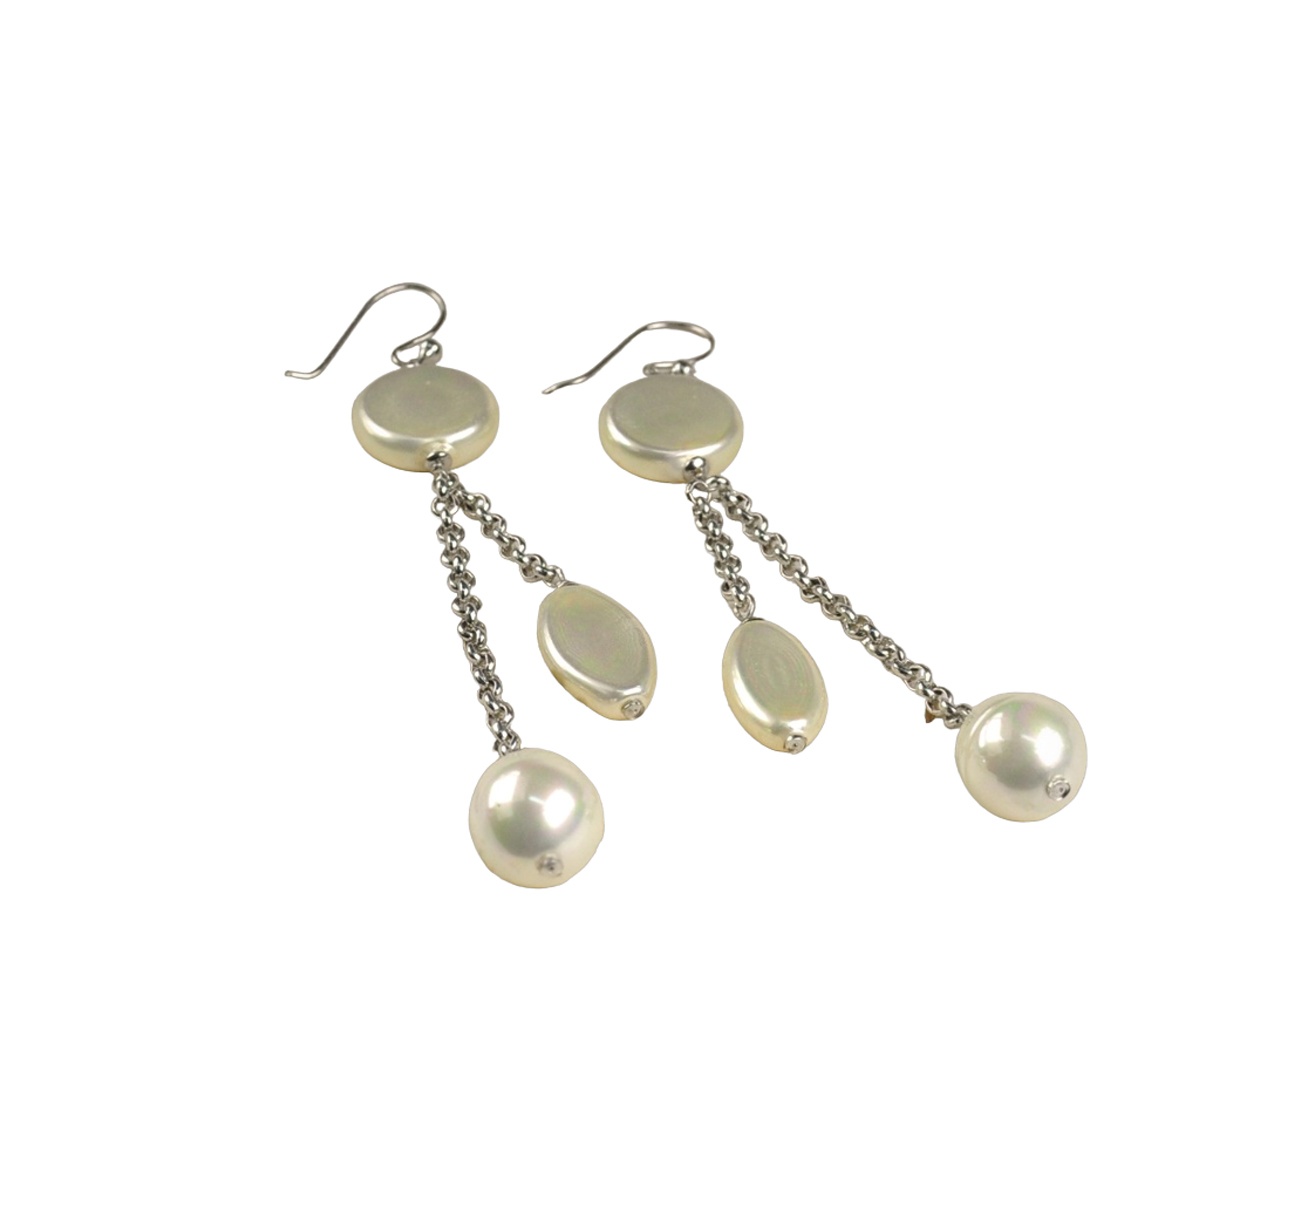 Long silver earrings with original pearls